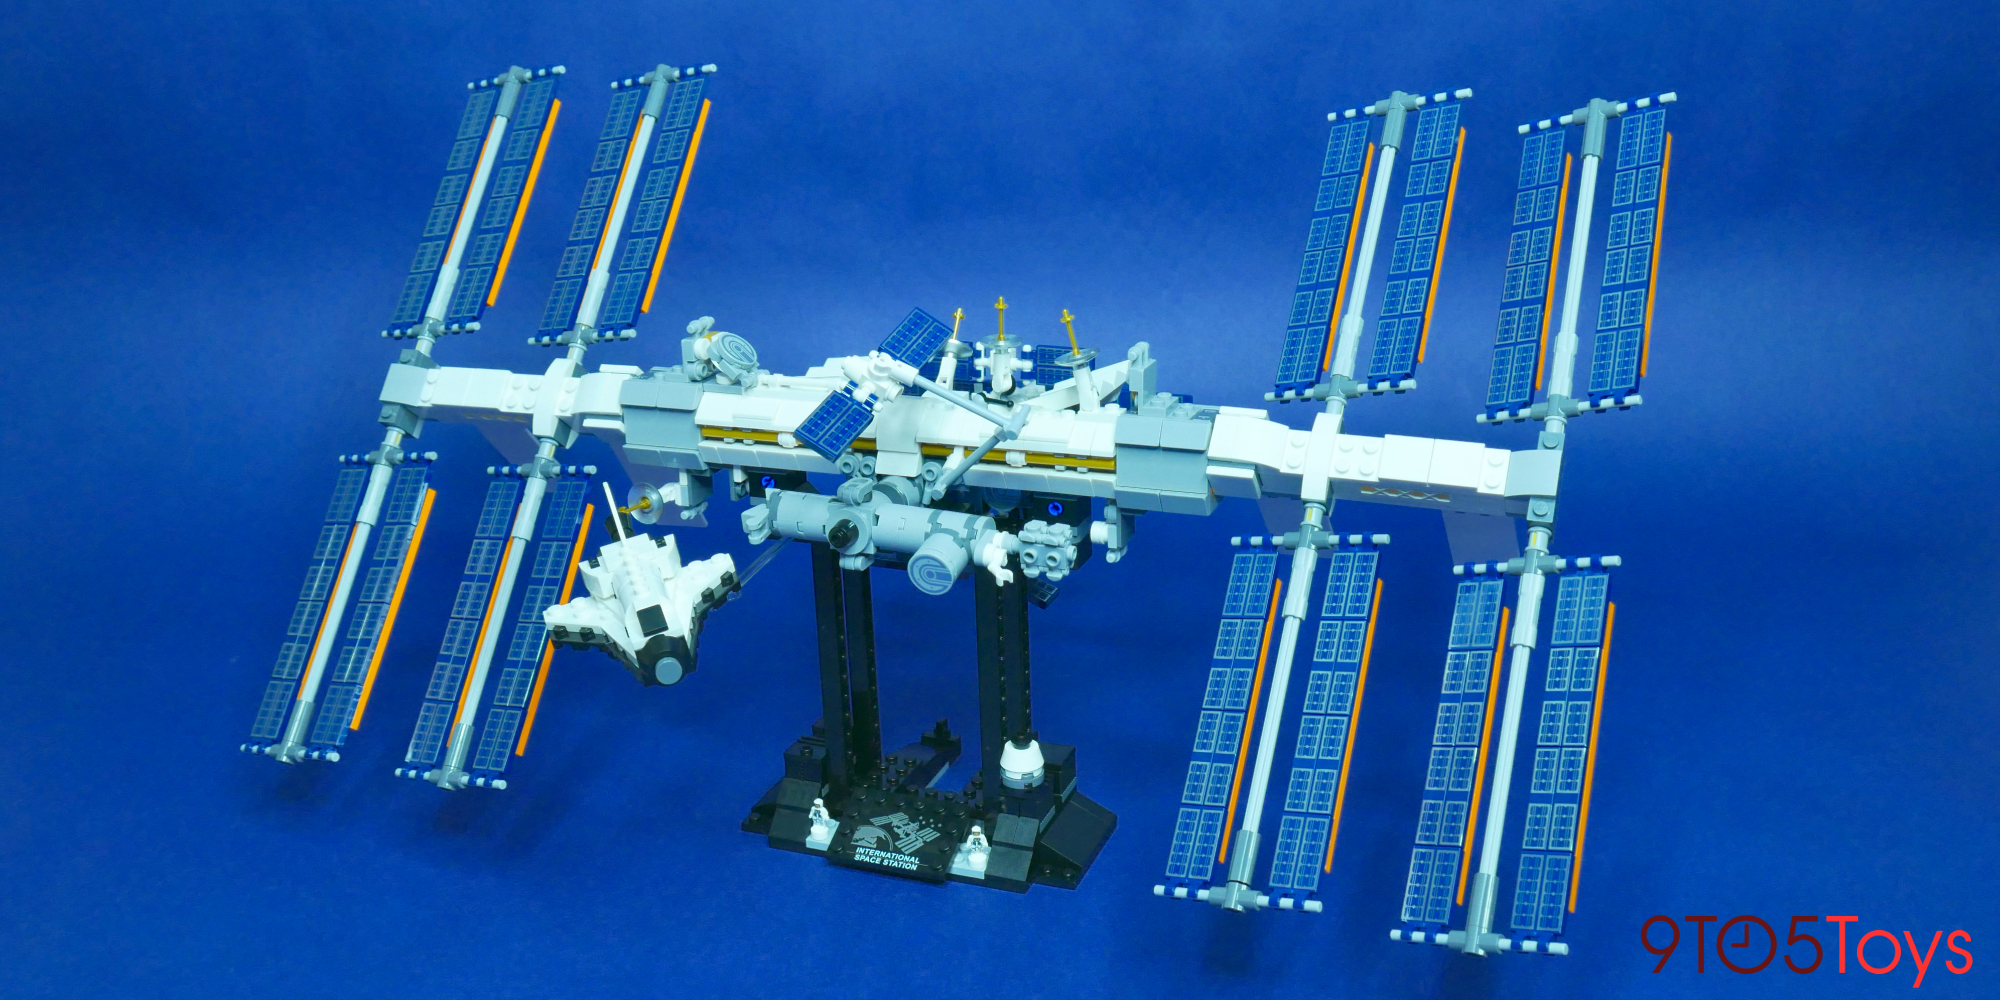 international space station lego